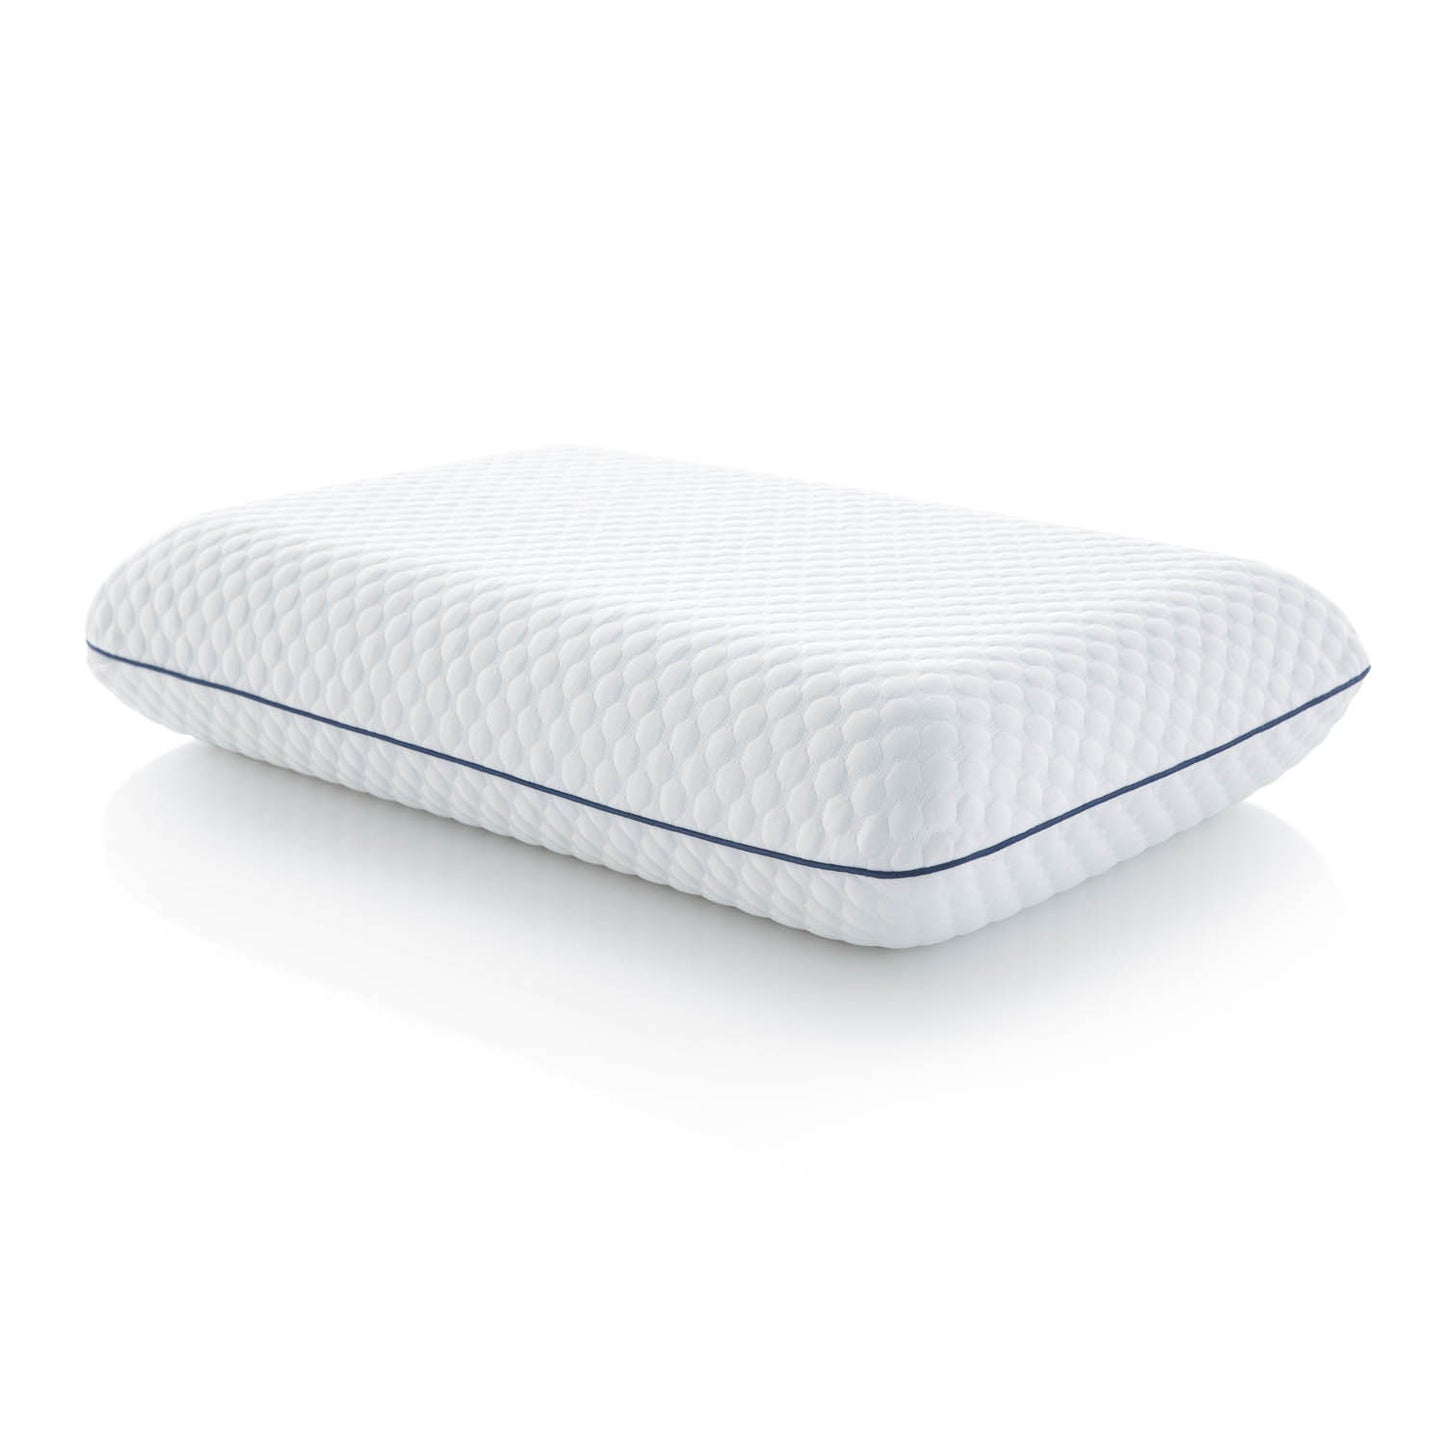 Weekender Gel Memory Foam Pillow, Standard